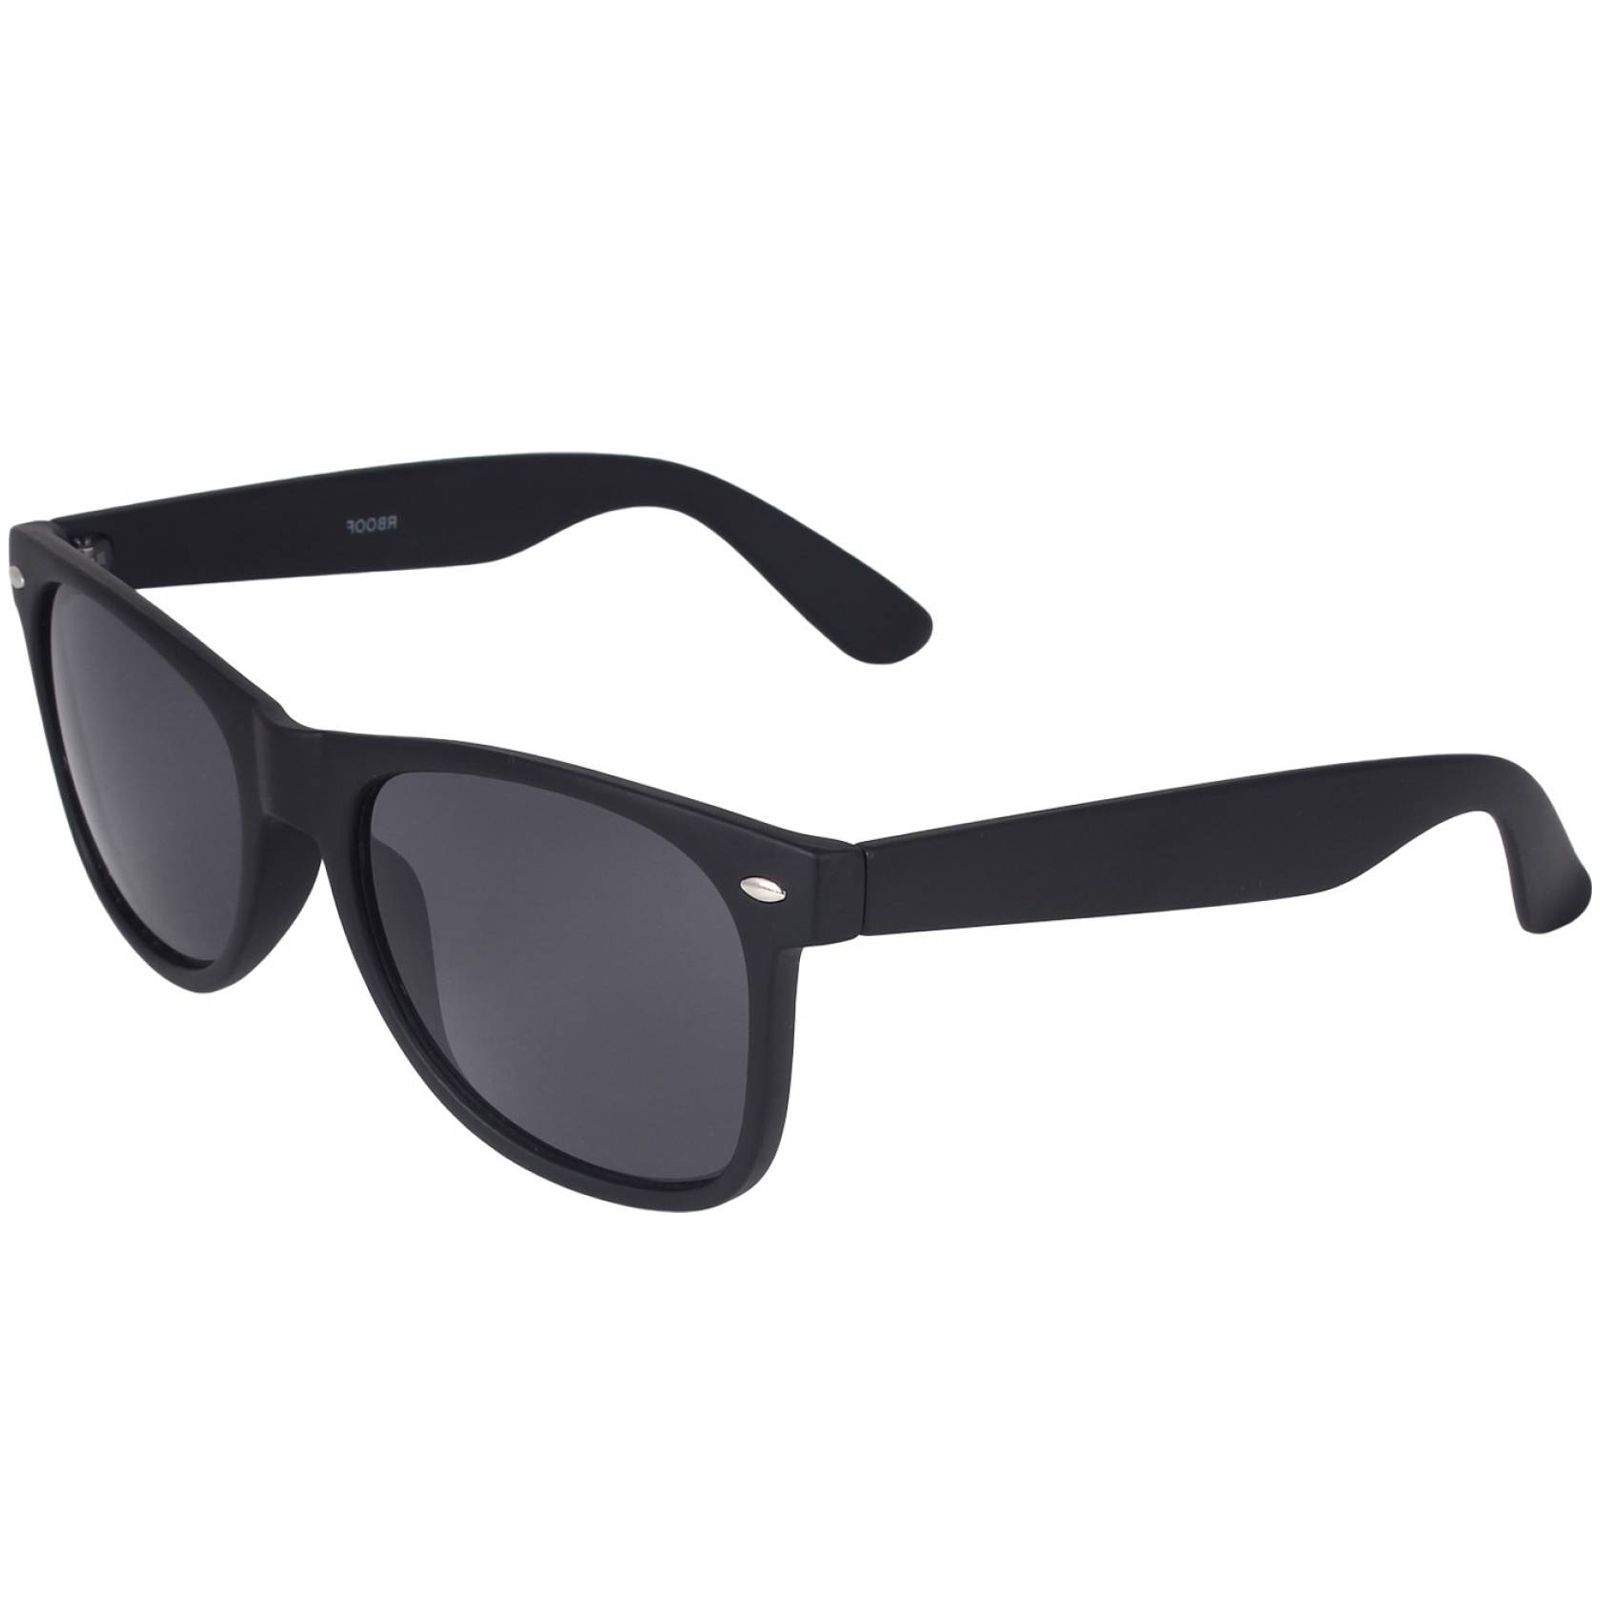 Buy Poloport Black Wayfarer Sunglasses 